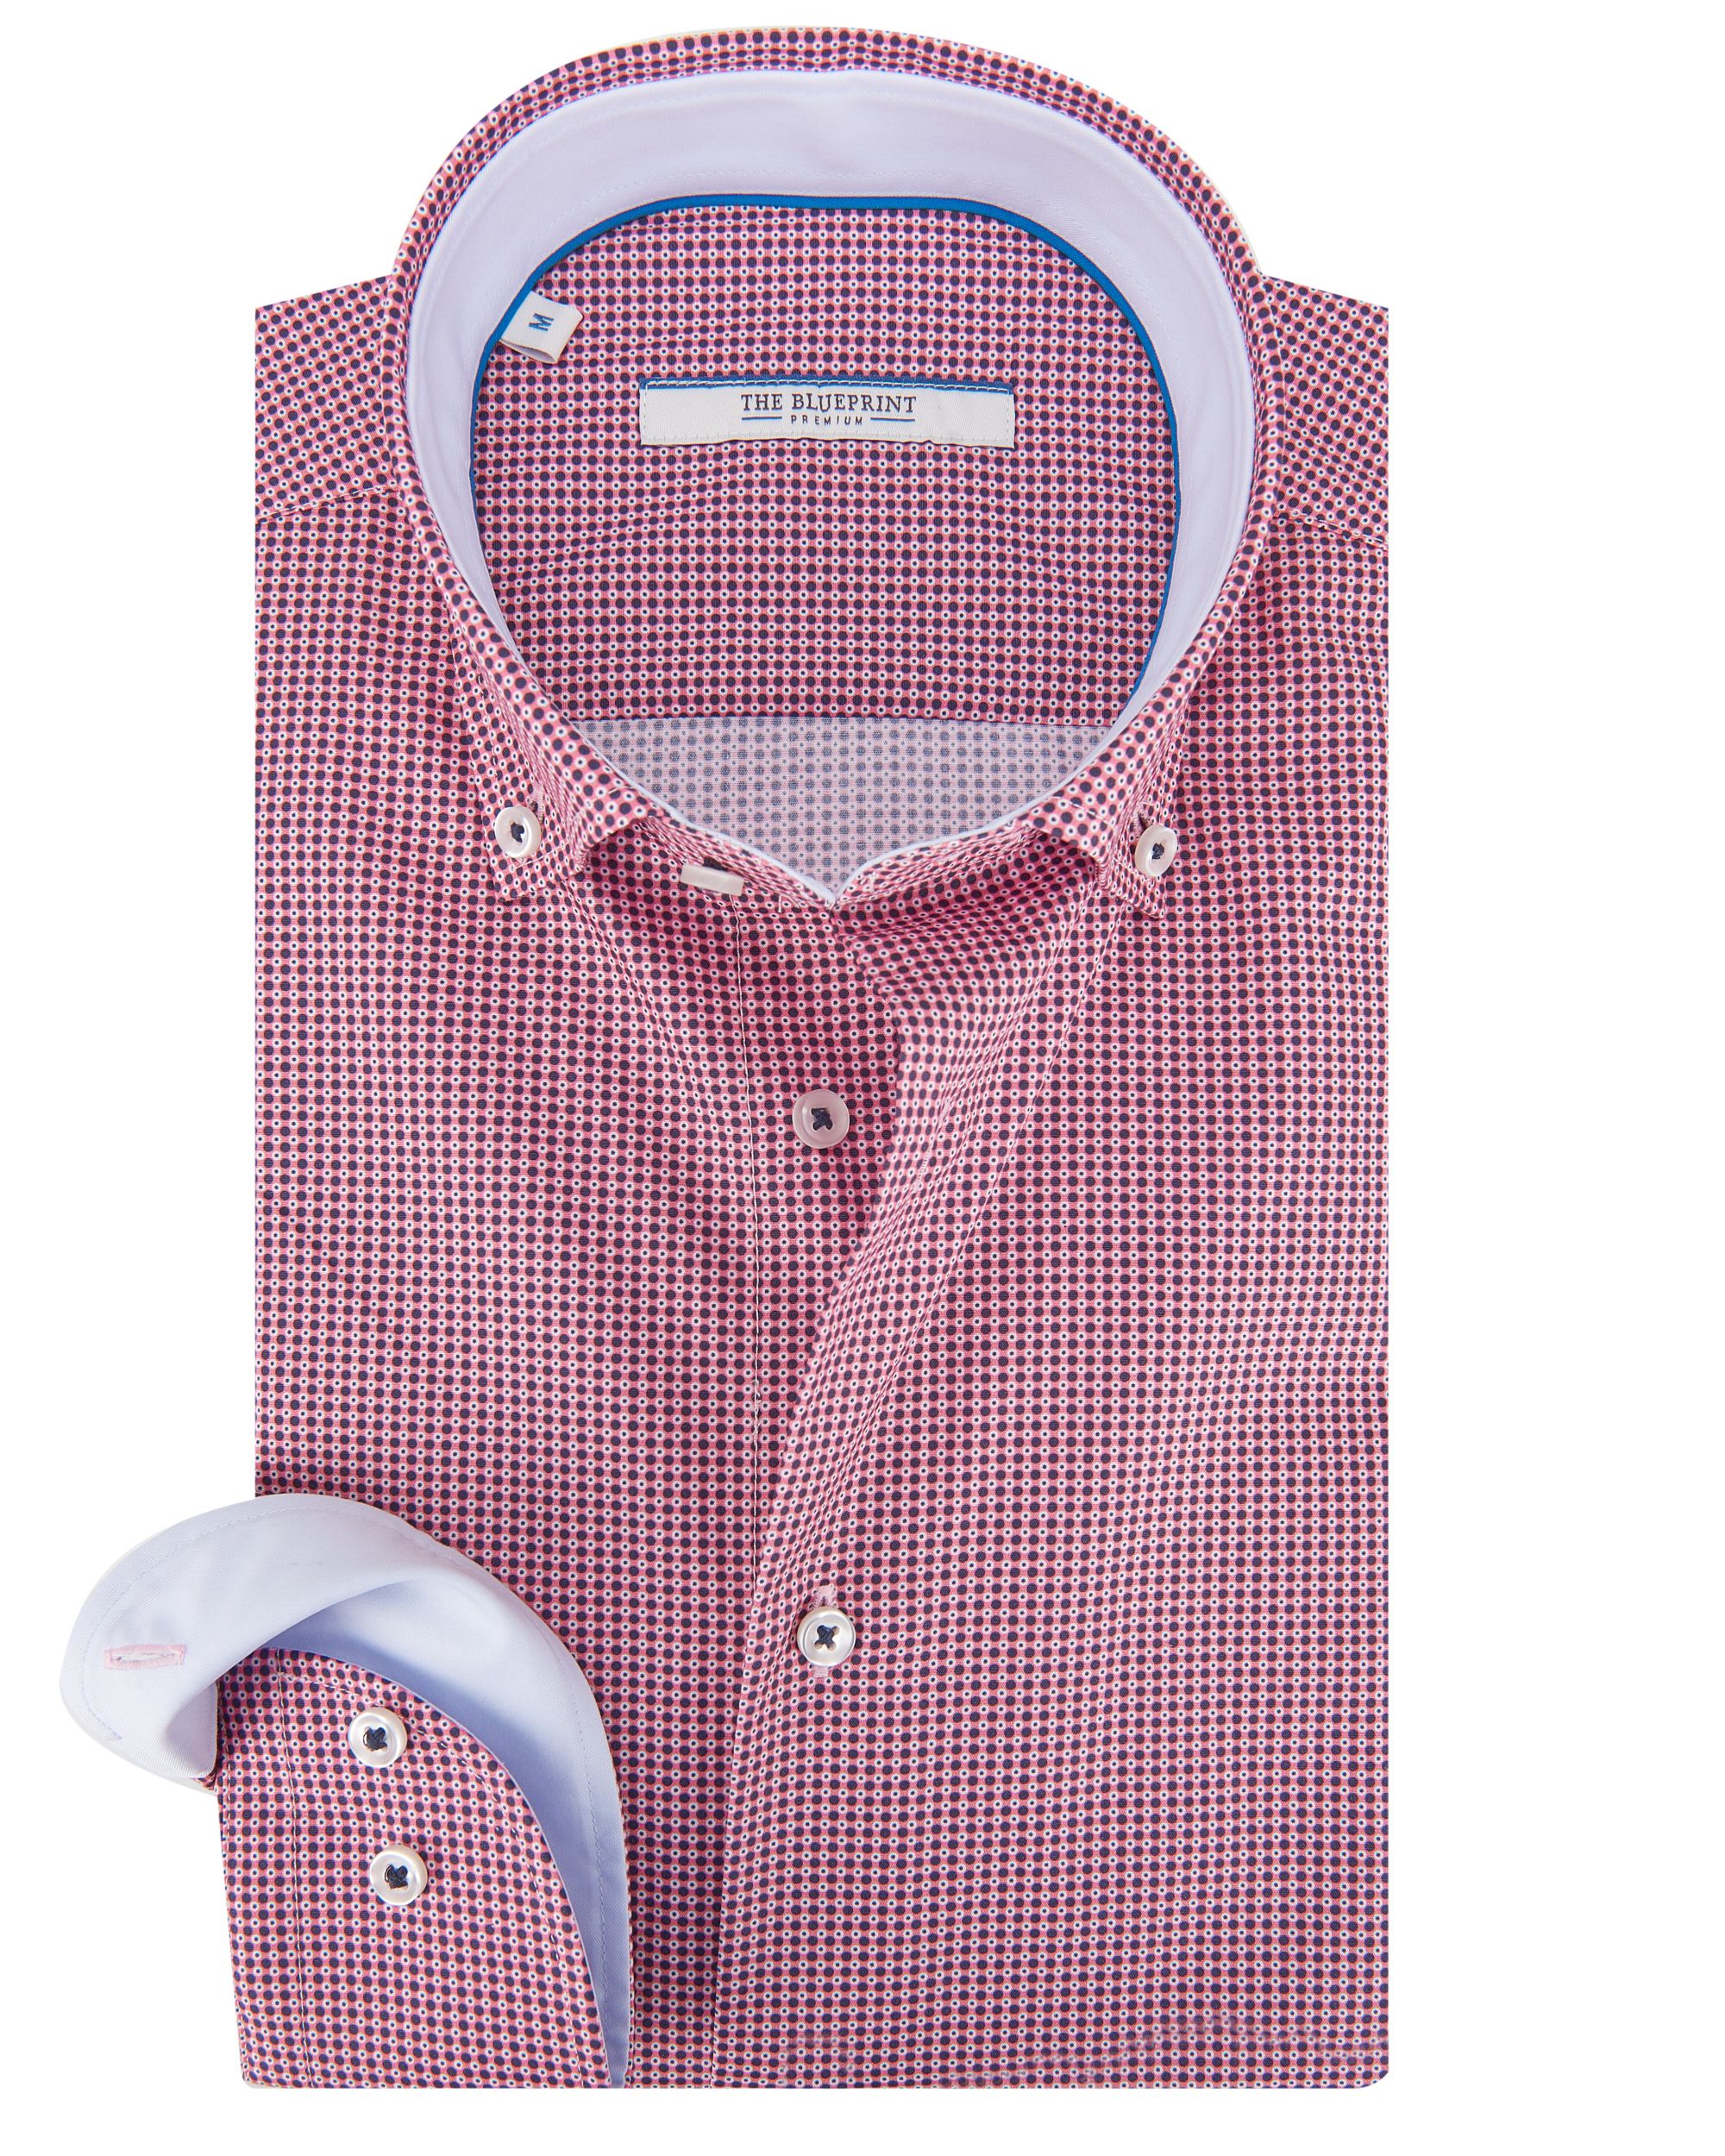 The BLUEPRINT Premium Trendy overhemd LM Rood dessin 084474-001-L